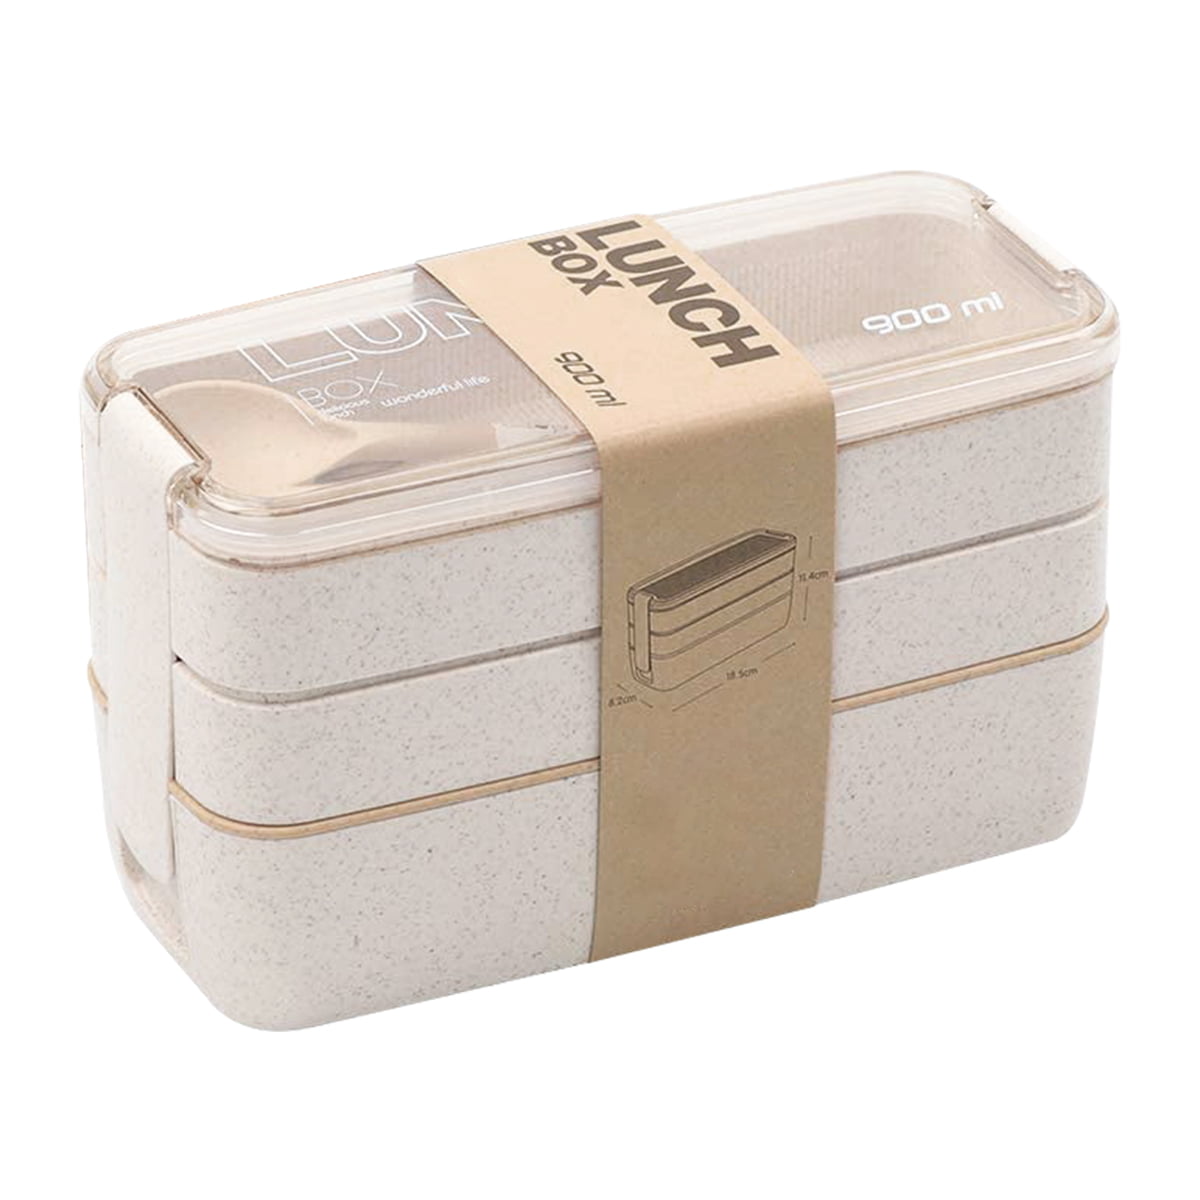 Splash large White Bento Box wo/lid (6132)